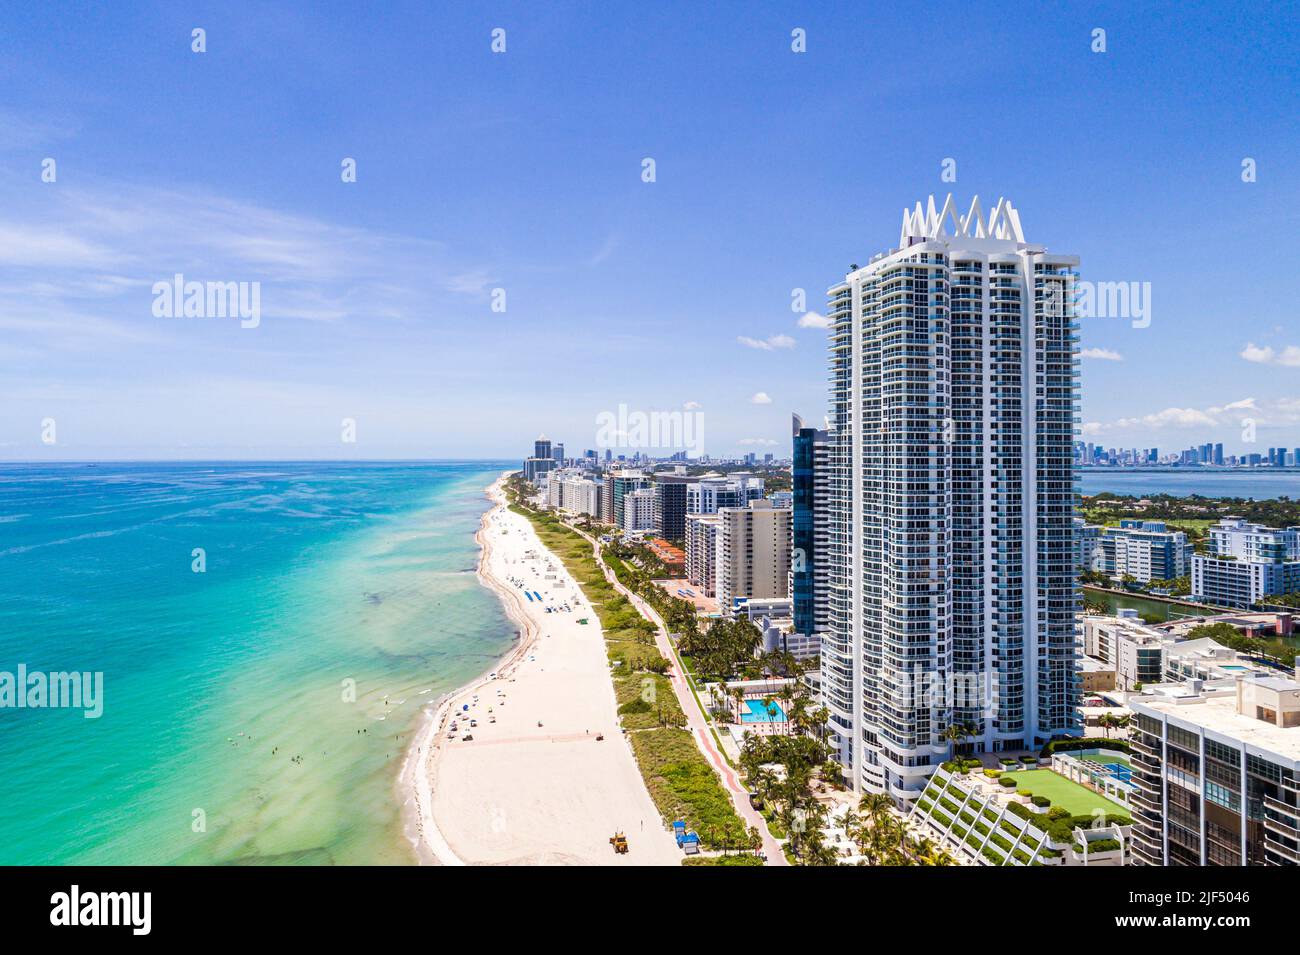 Miami Beach Florida,aerial overhead view from above,condominium buildings beachfront waterfront oceanfront,Atlantic Ocean shore shoreline public beach Stock Photo